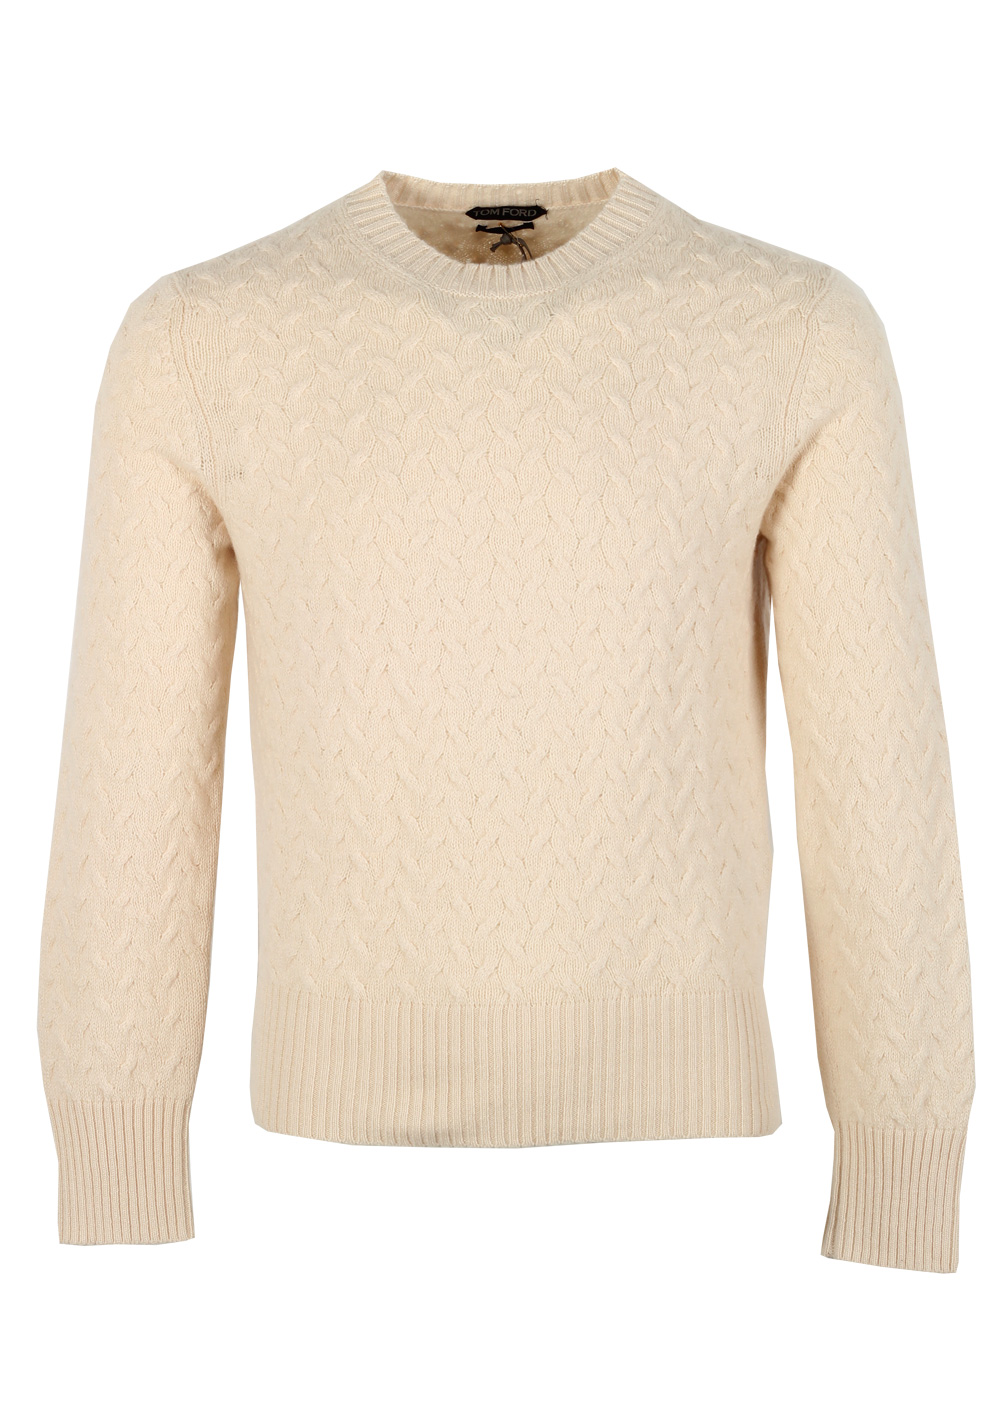 TOM FORD Off White Crew Neck Sweater Size 48 / 38R U.S. In Cotton Cashmere | Costume Limité